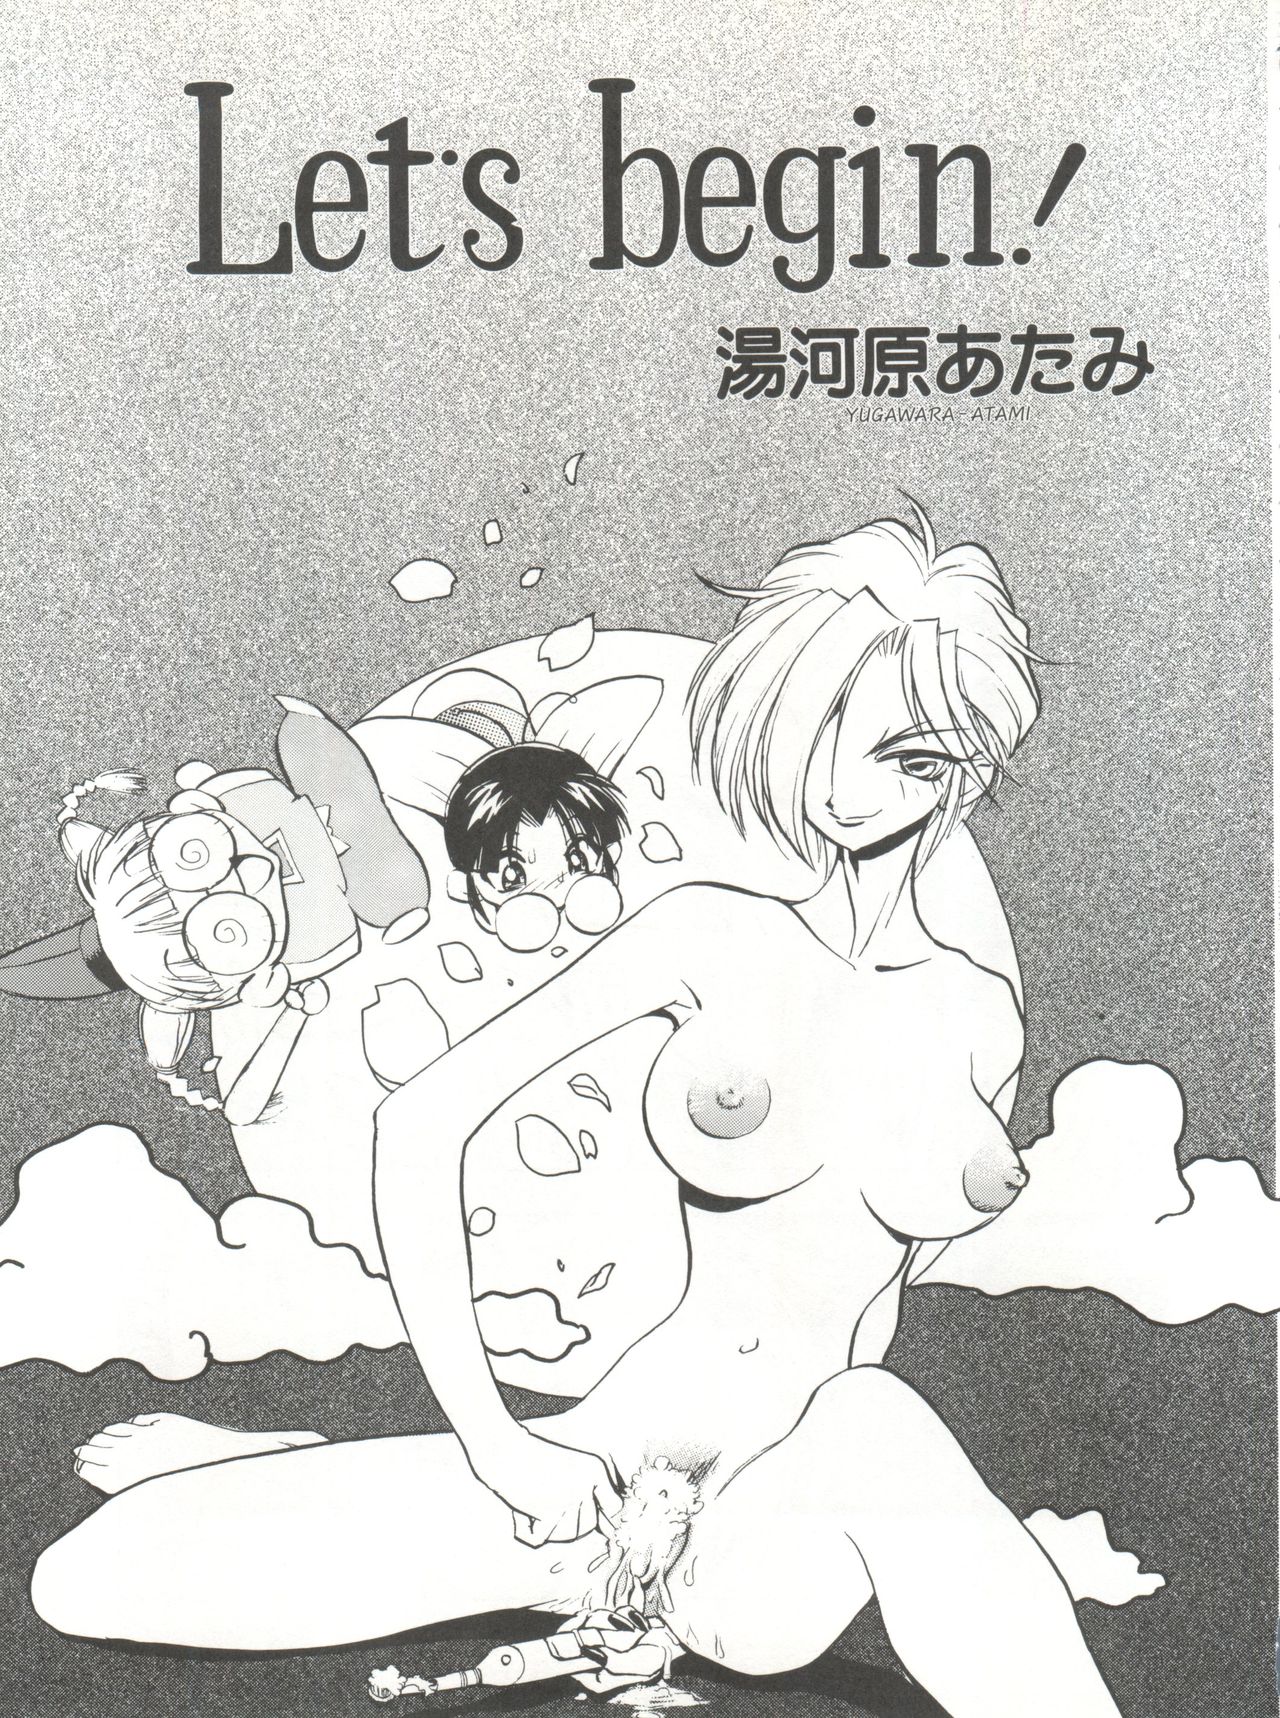 Mecha eli chan hentai doujinshi and manga фото 81